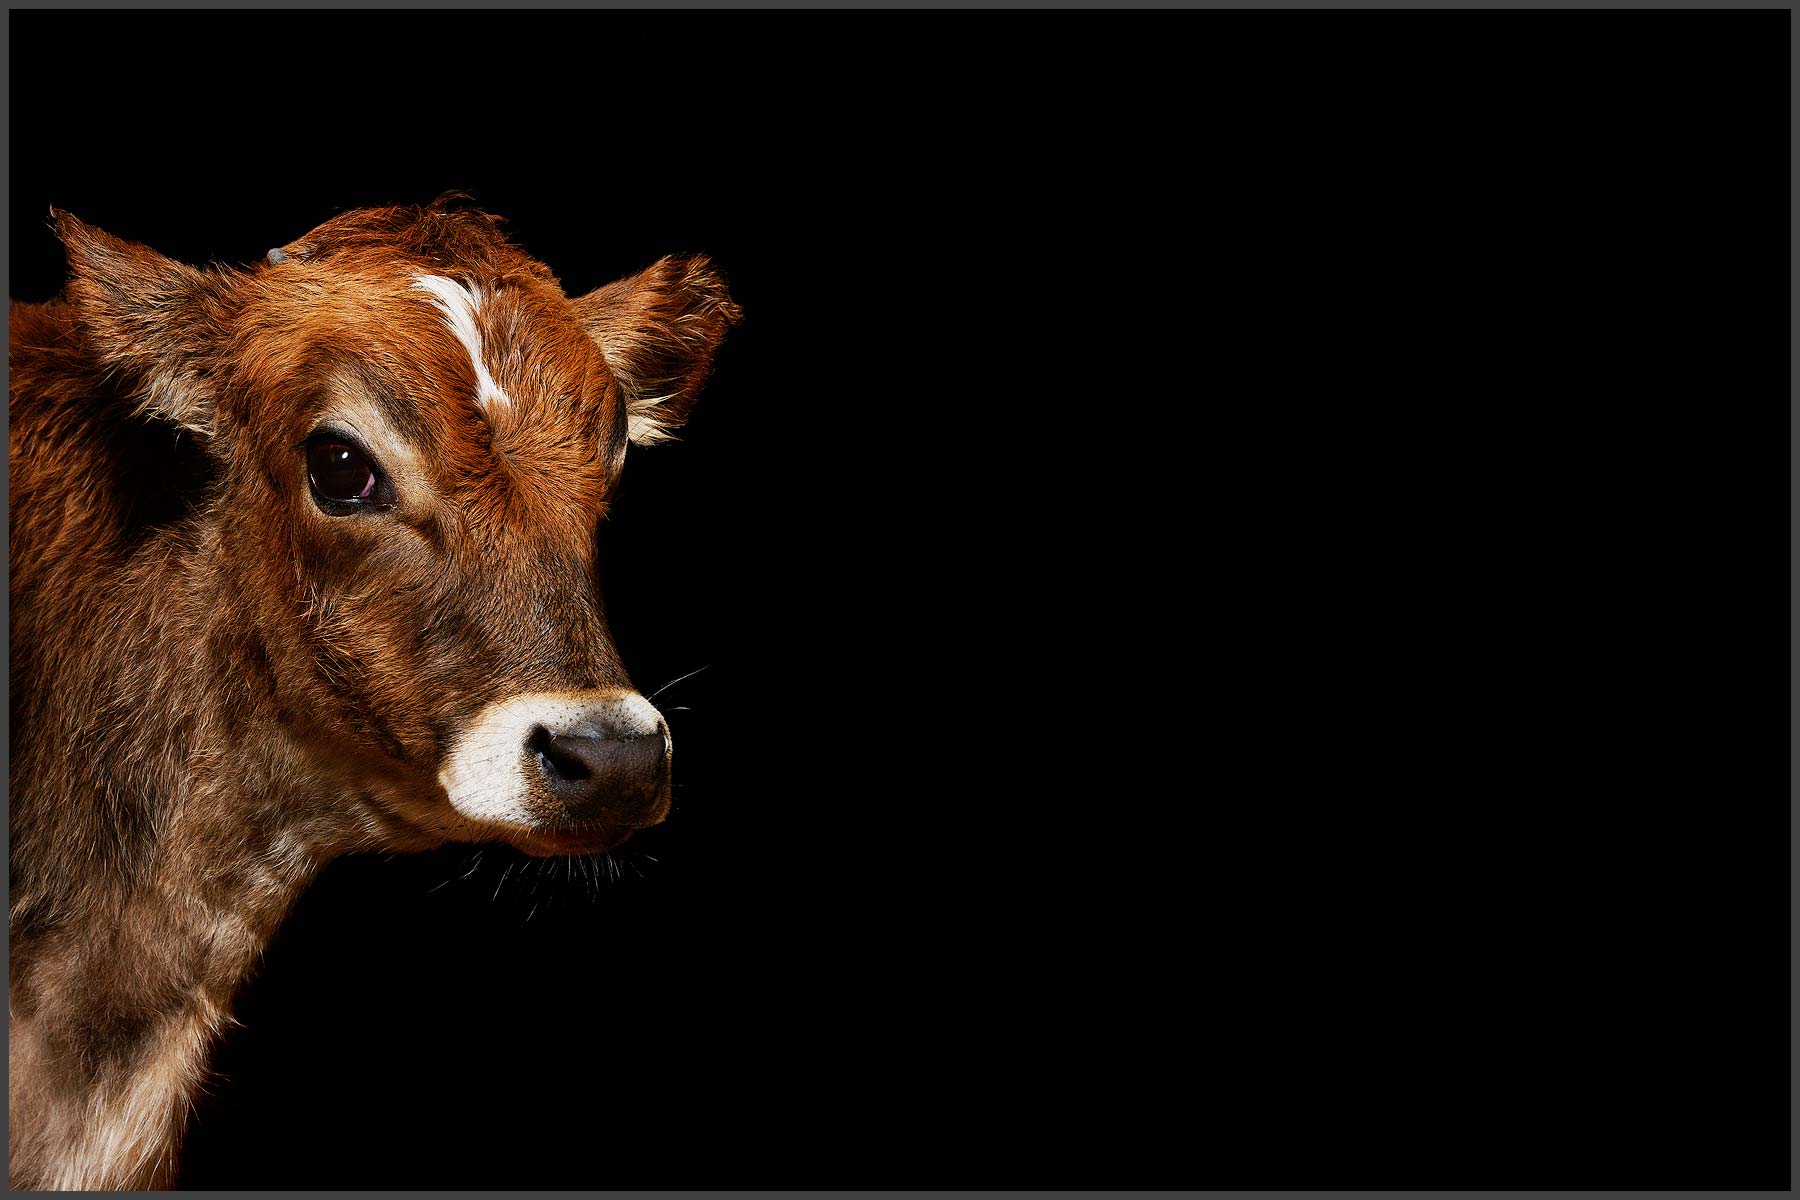 farm-animal-portrait-rosco-a-rescued-calf-or-mike-lorrig-still-life-photographer